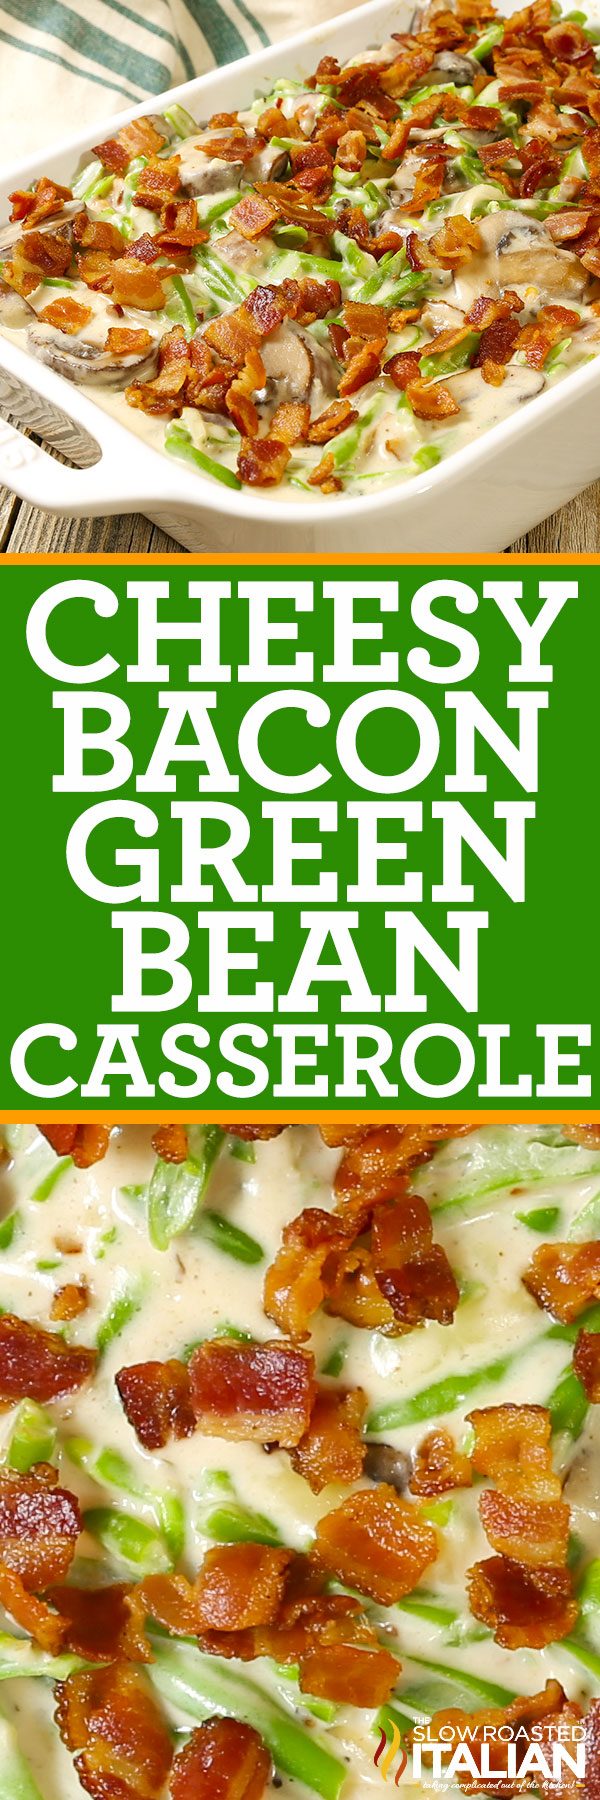 cheesy-bacon-green-bean-casserole-pin-9774850